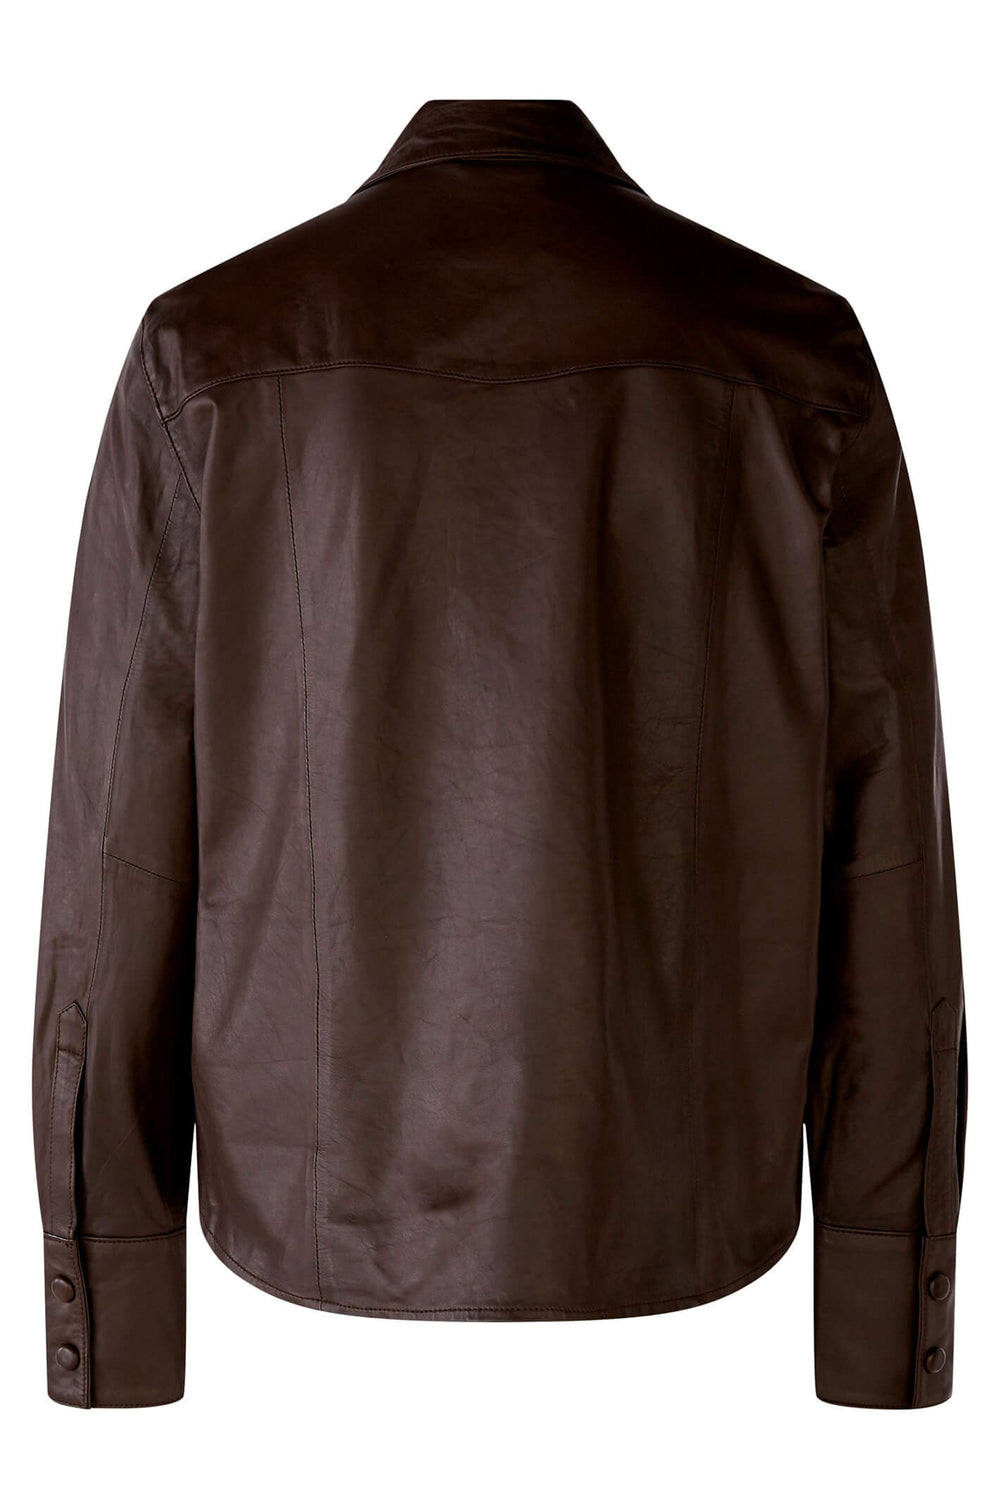 Oui 79854 Dark Brown Leather Shirt - Olivia Grace Fashion